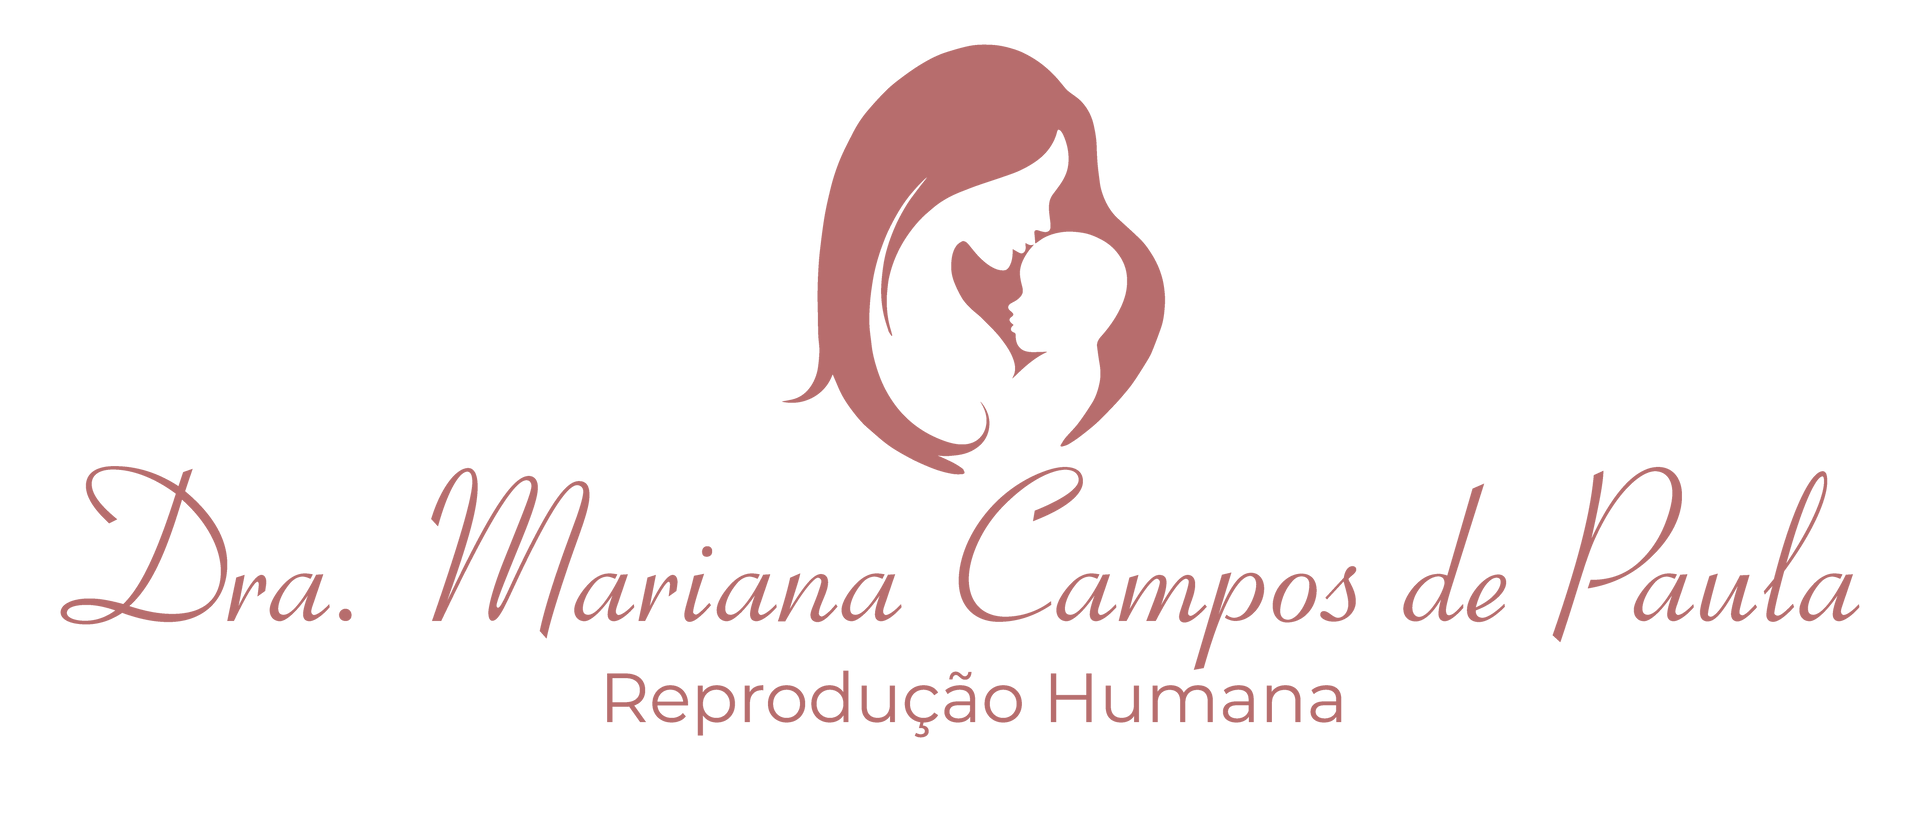 Logotipo da Dra. Mariana Campos de Paula